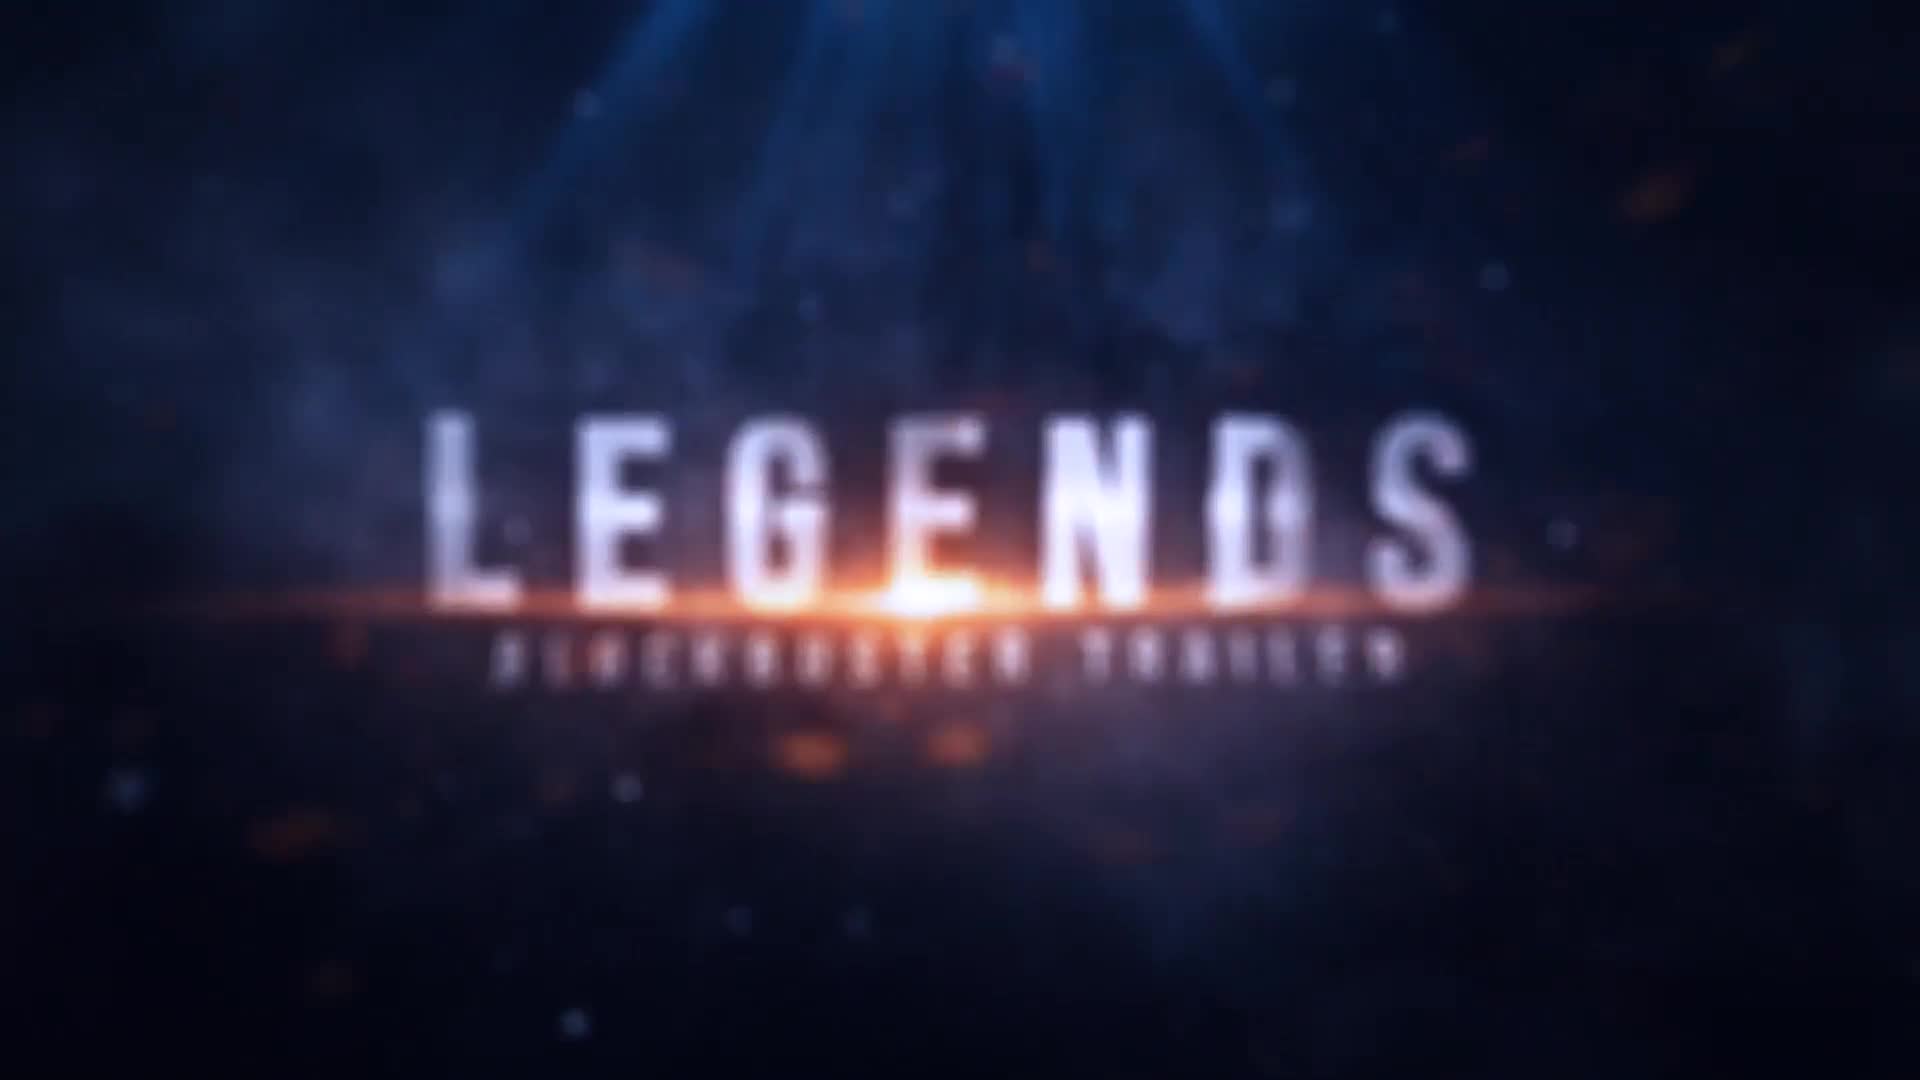 Legends Blockbuster Title - Download Videohive 22339232